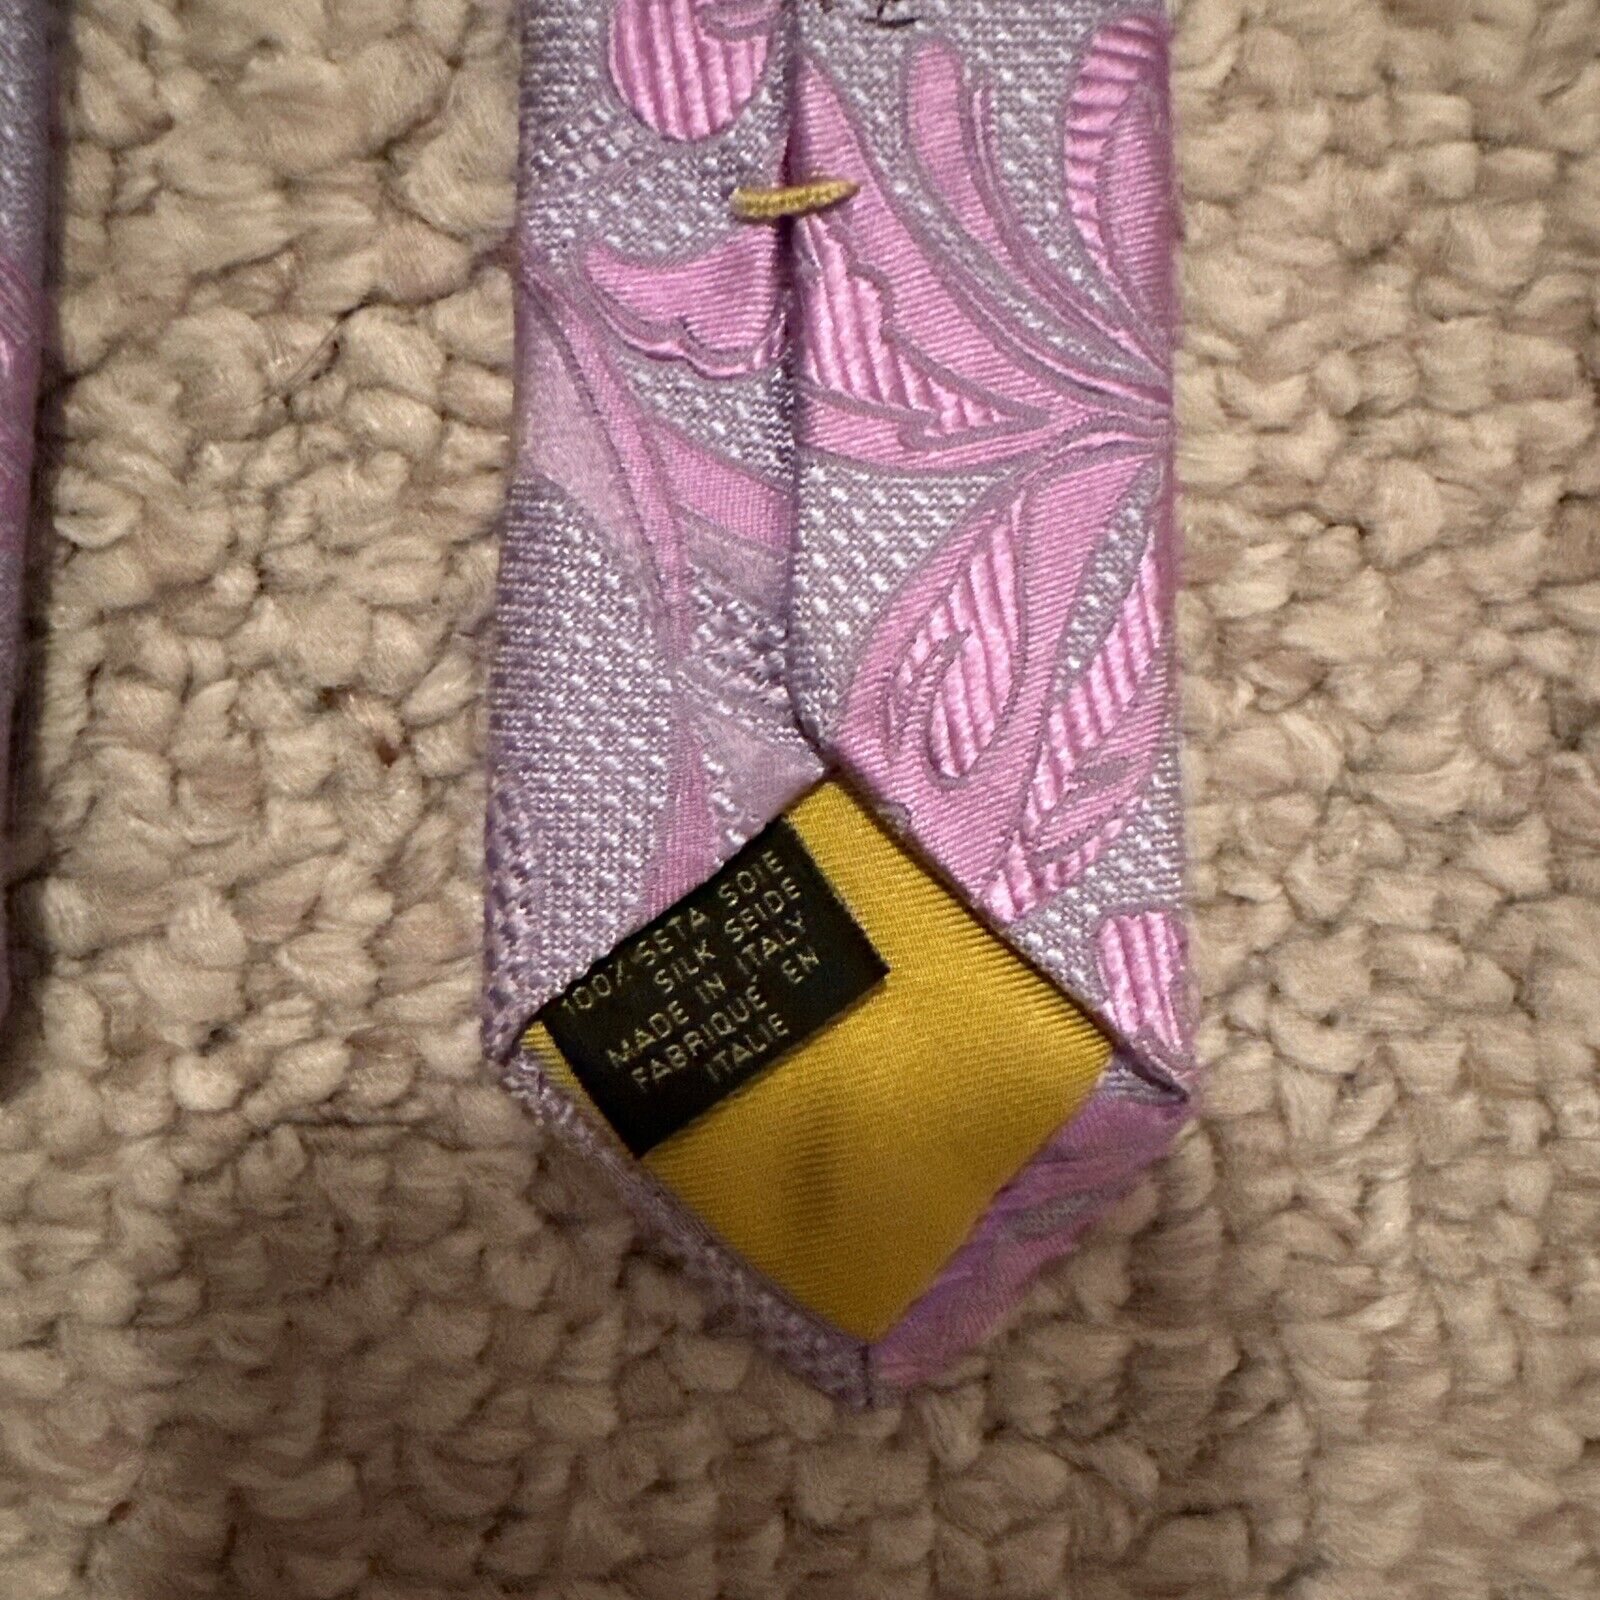 Emilio Pucci Men’s Necktie Tie Lavender Purple - image 5